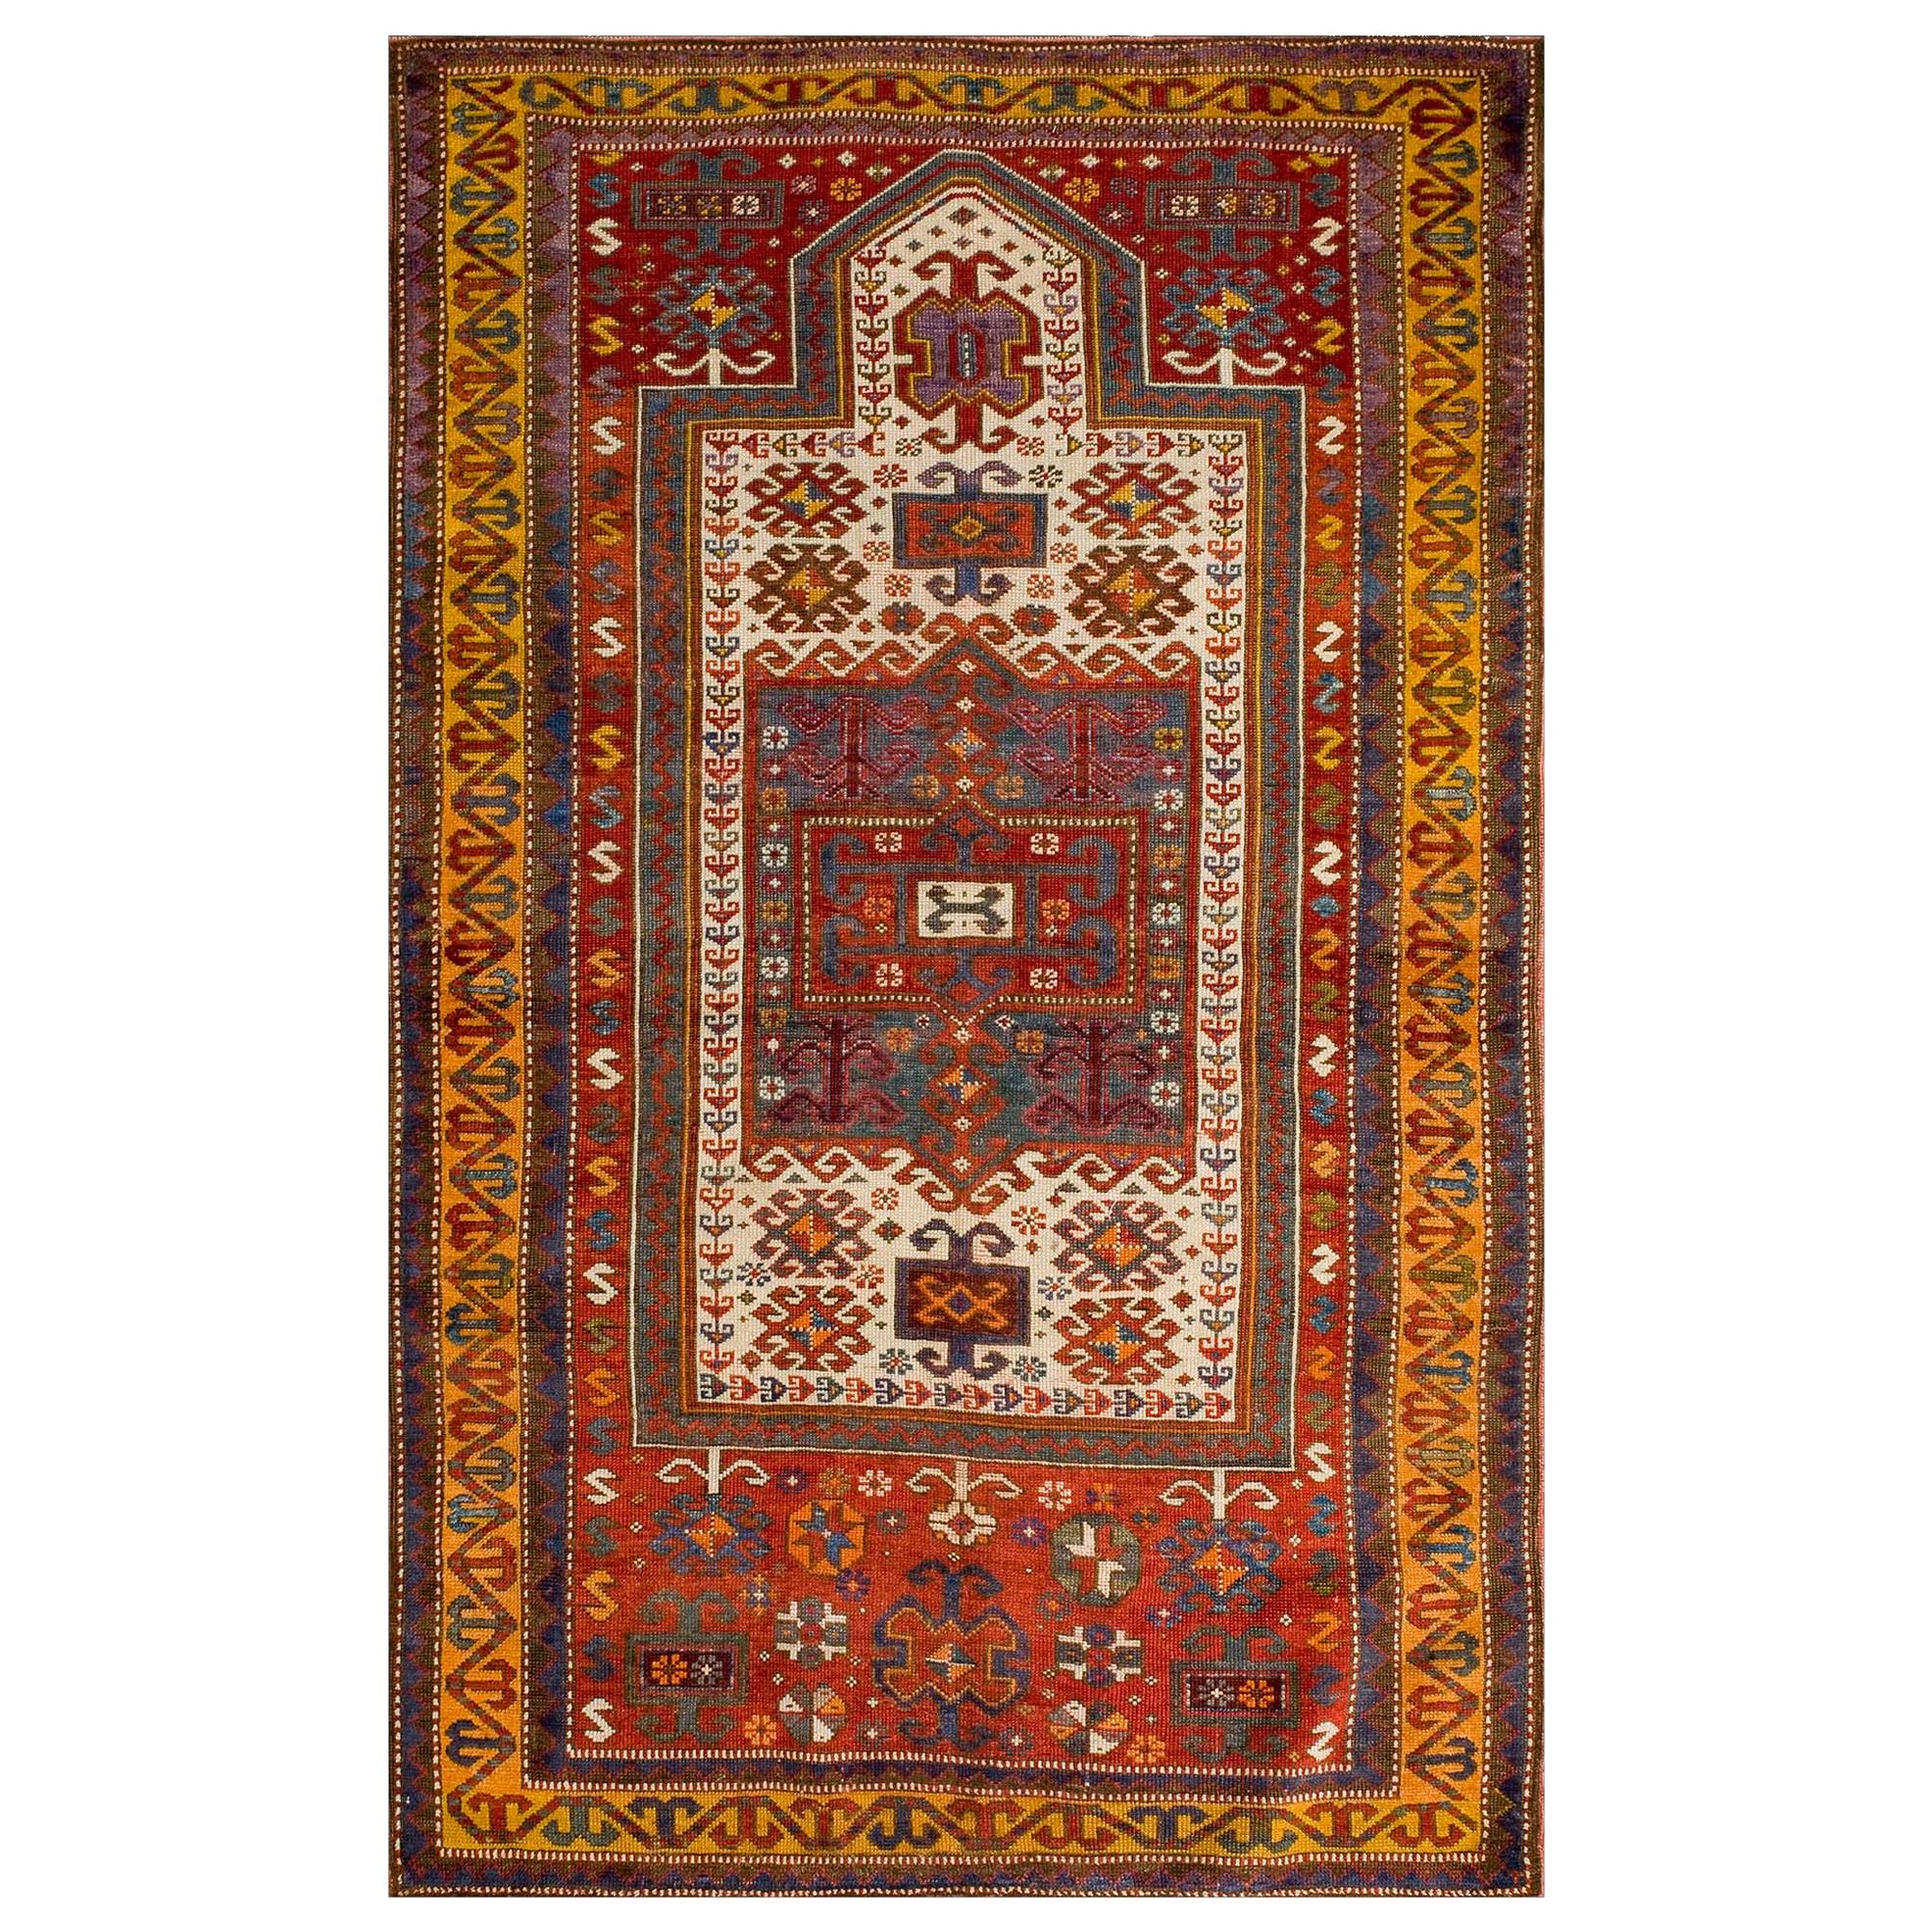 Late 19th Century Caucasian Kazak Fachralo Prayer Rug ( 3'9" x 6' - 115 x 183 ) For Sale